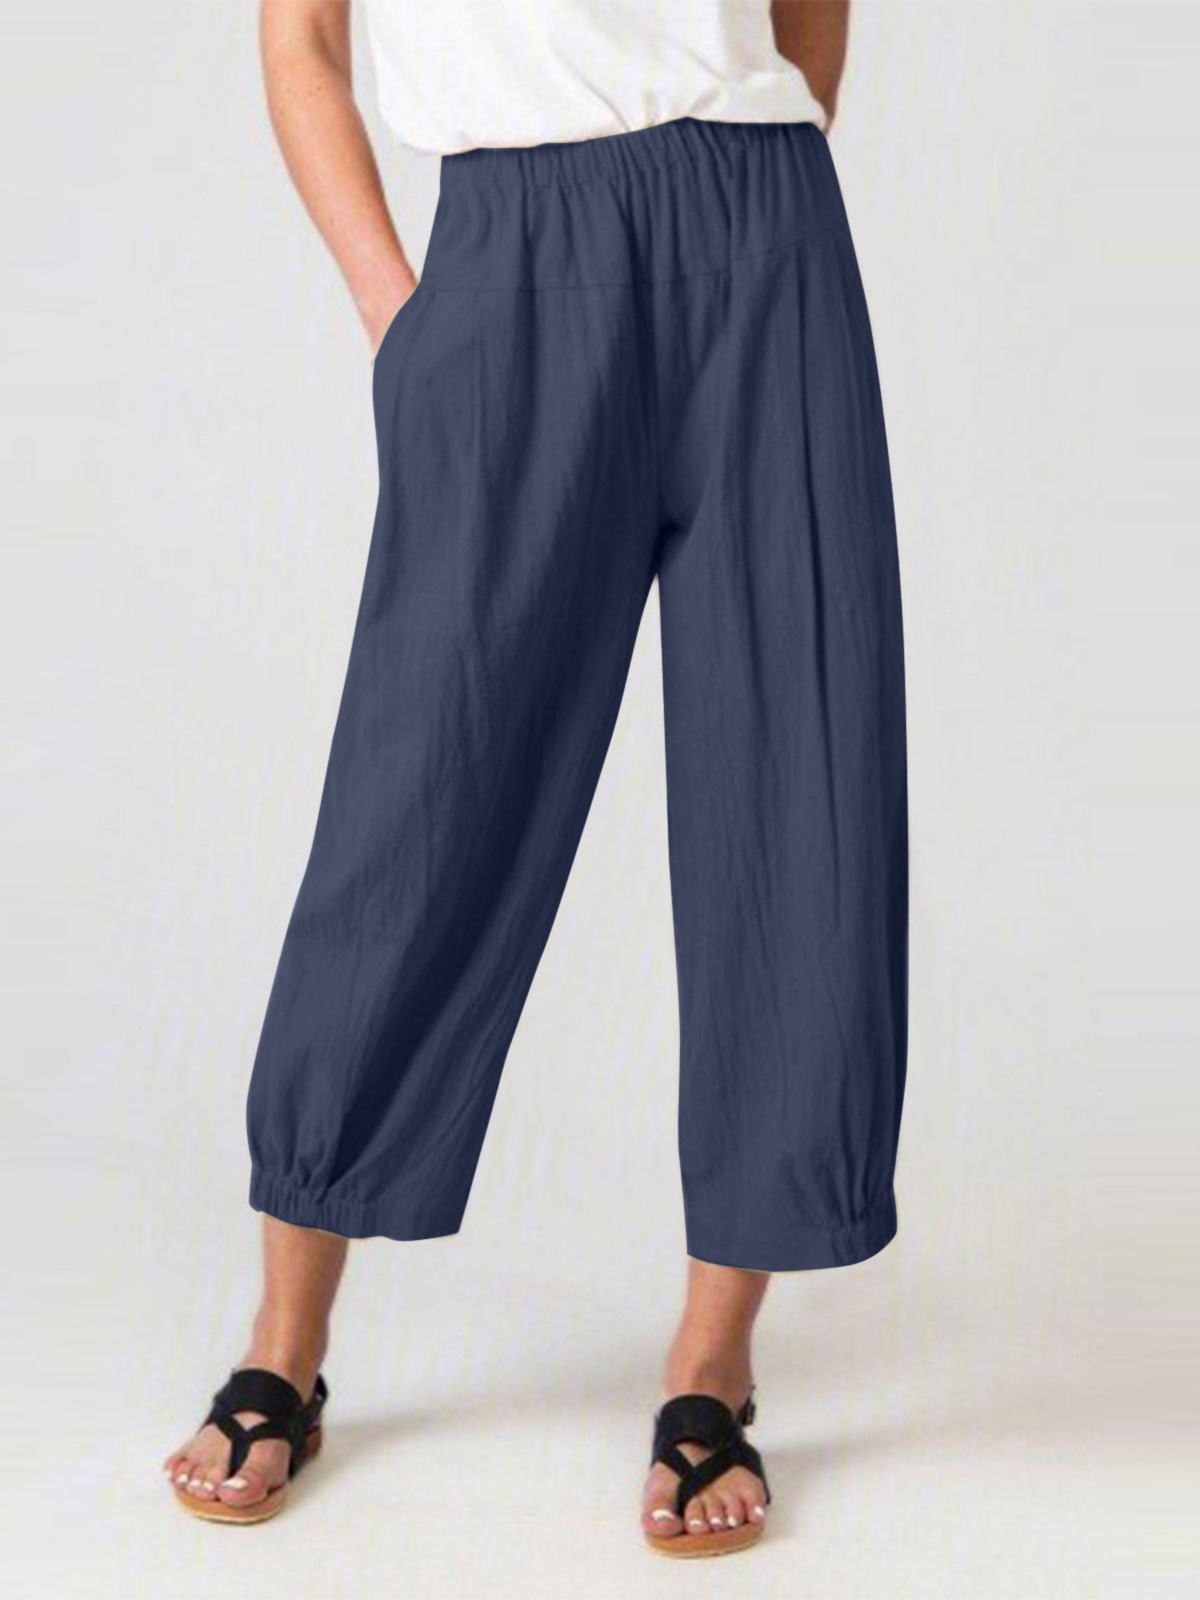 Women's Pants Loose High Waist Pocket Harem pants - Pants - Instastyled | Online Fashion Free Shipping Clothing, Dresses, Tops, Shoes - 03/08/2022 - Bottoms - Color_Black